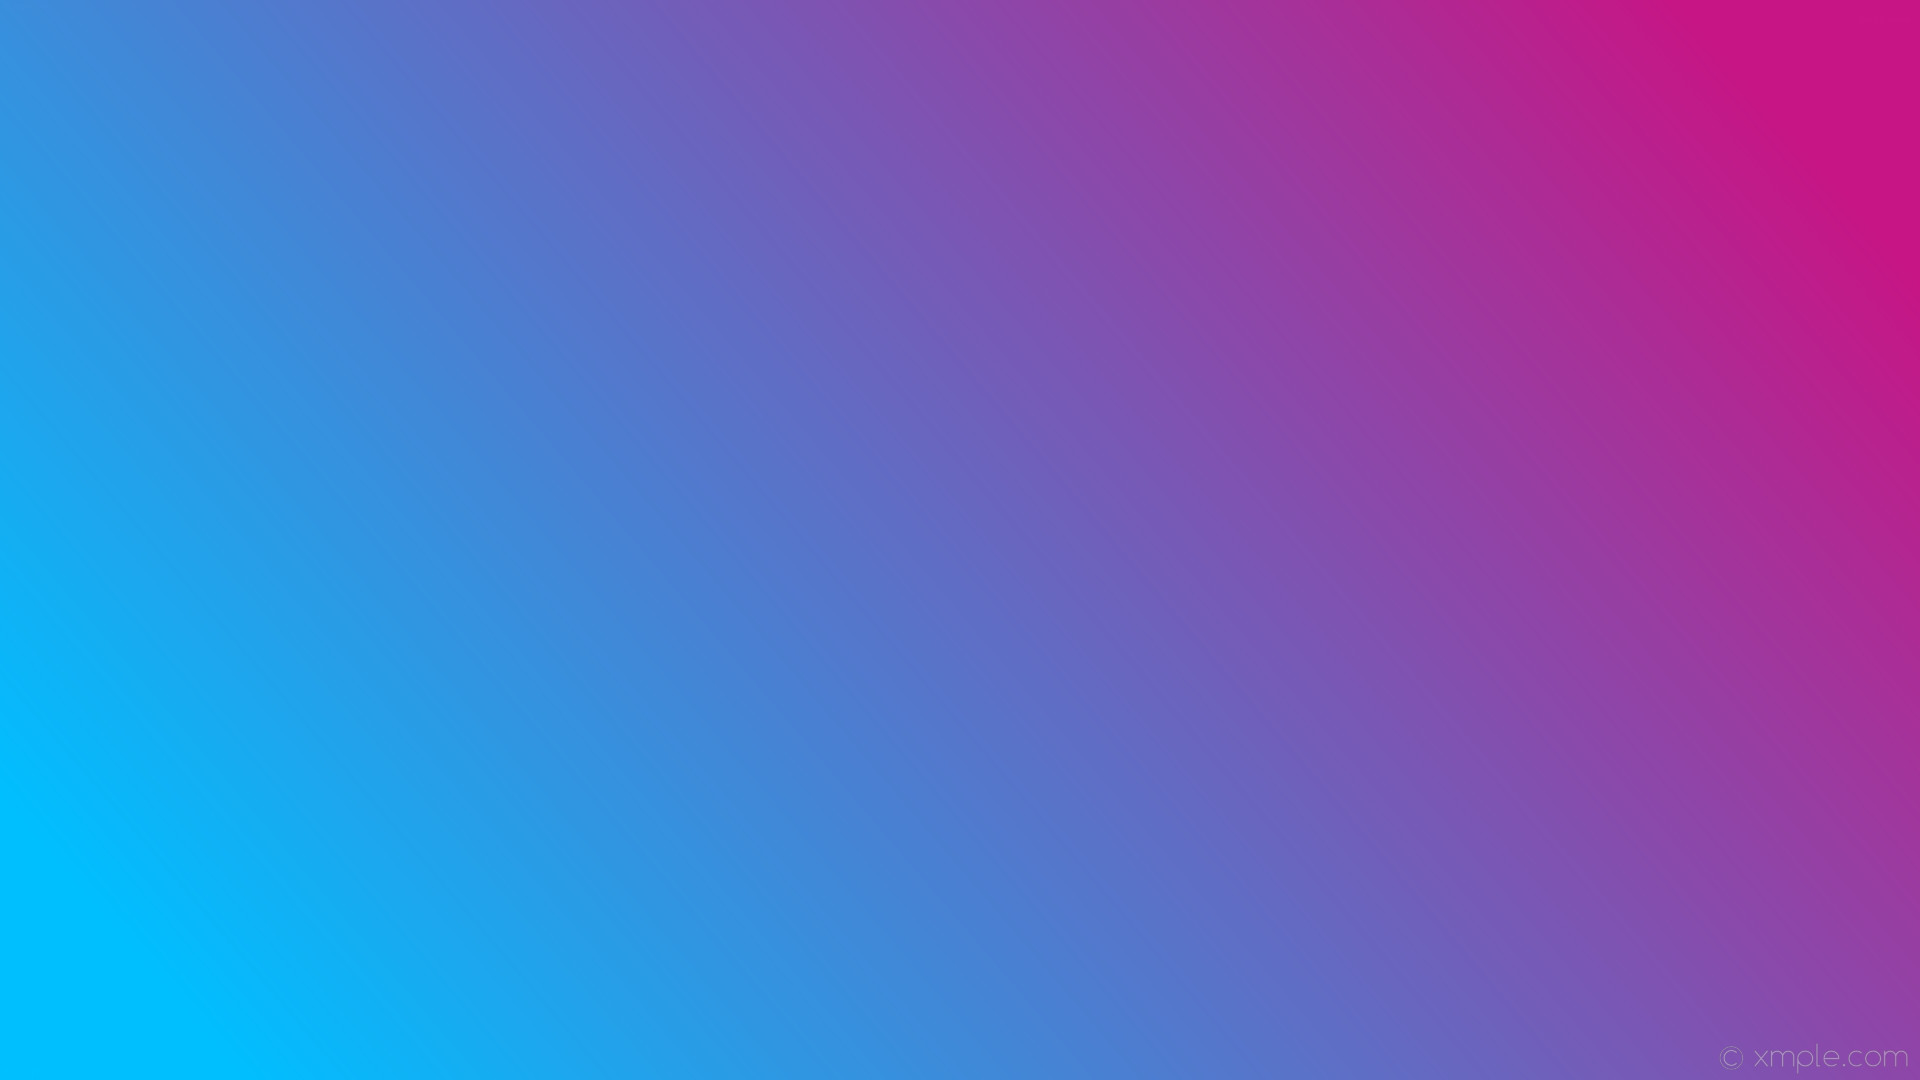 Wallpaper linear gradient pink blue medium violet red deep sky blue #c71585 bfff 15